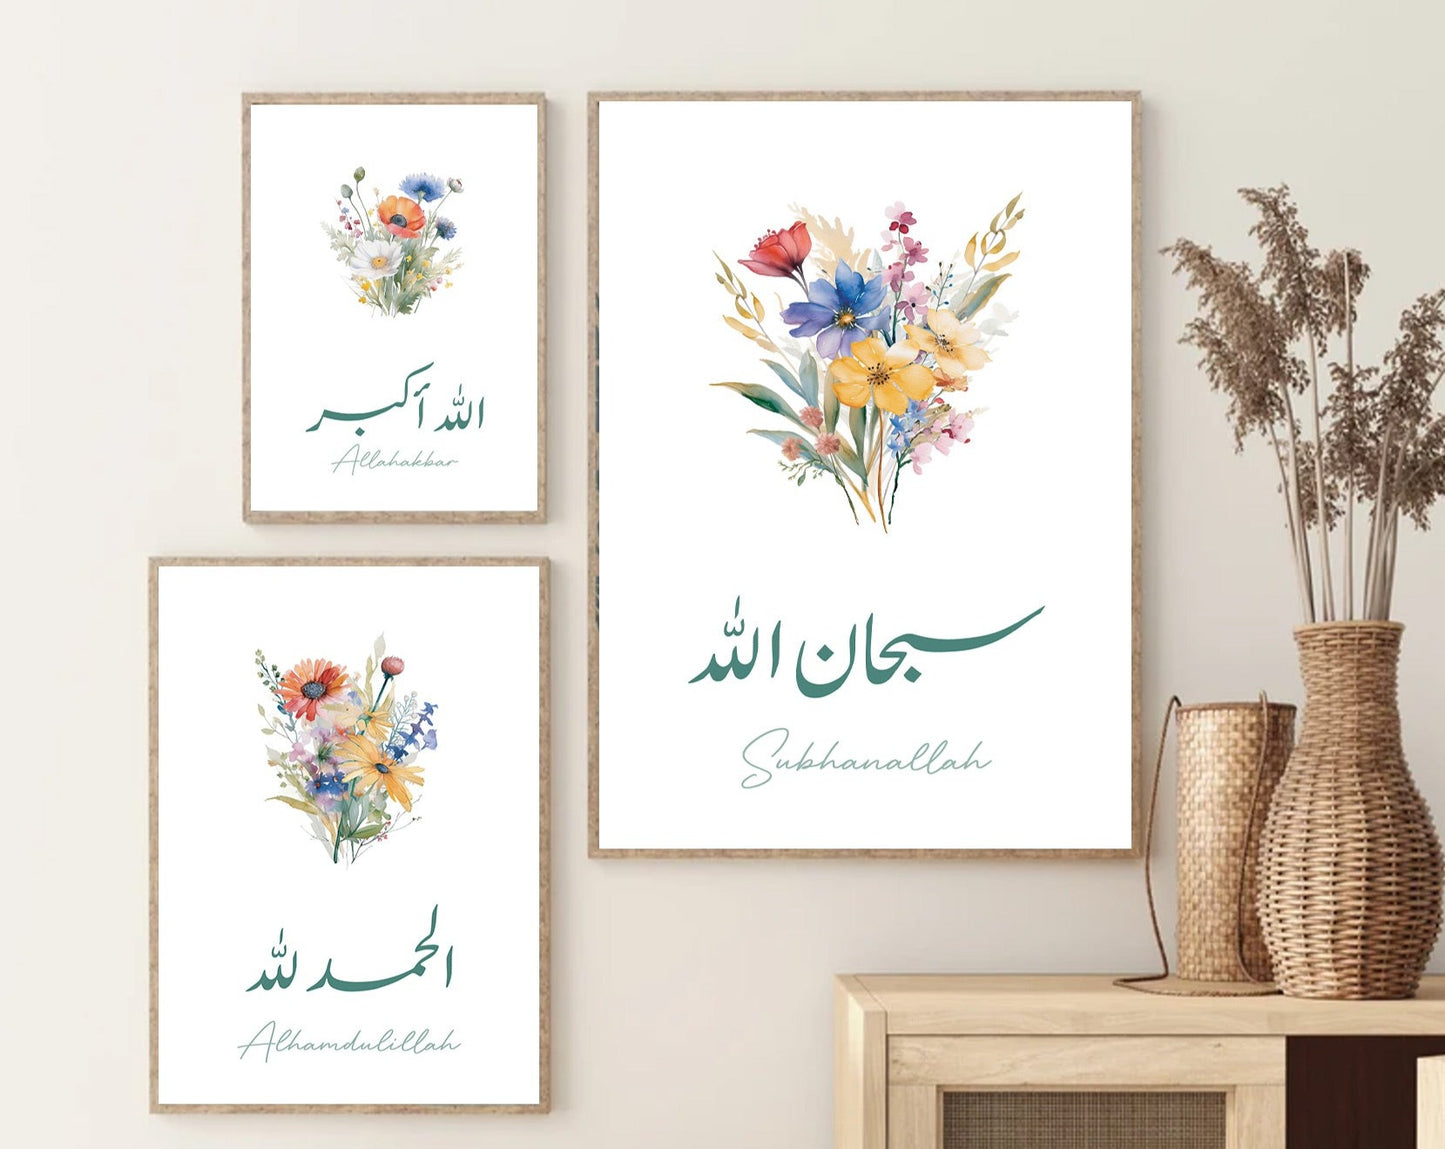 Islamic Prints for Kids room decors